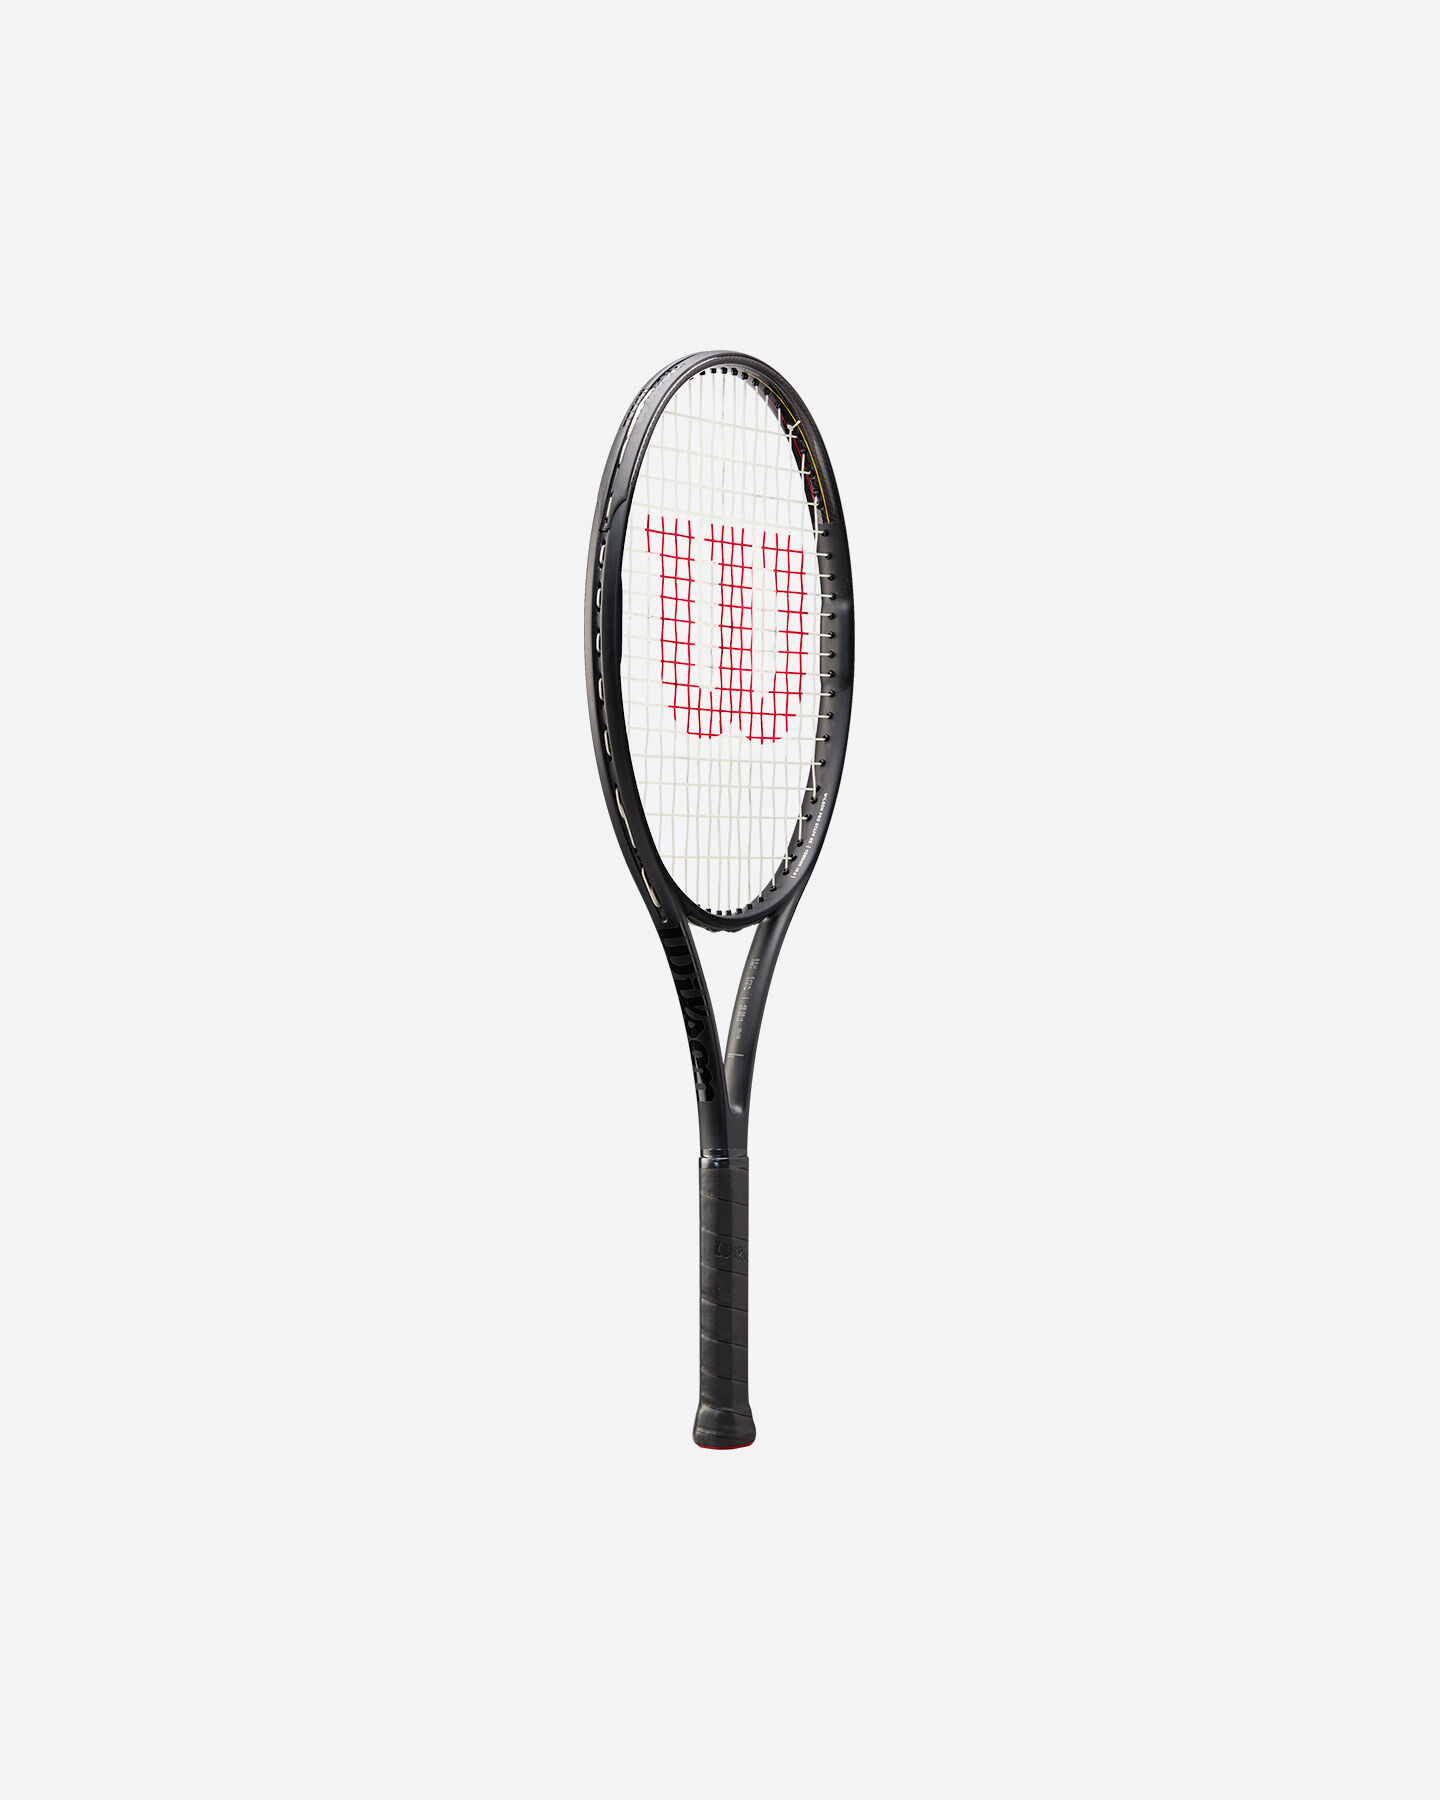  Racchetta tennis WILSON PRO STAFF 26 V13.0 JR S5344211|UNI|26 scatto 1